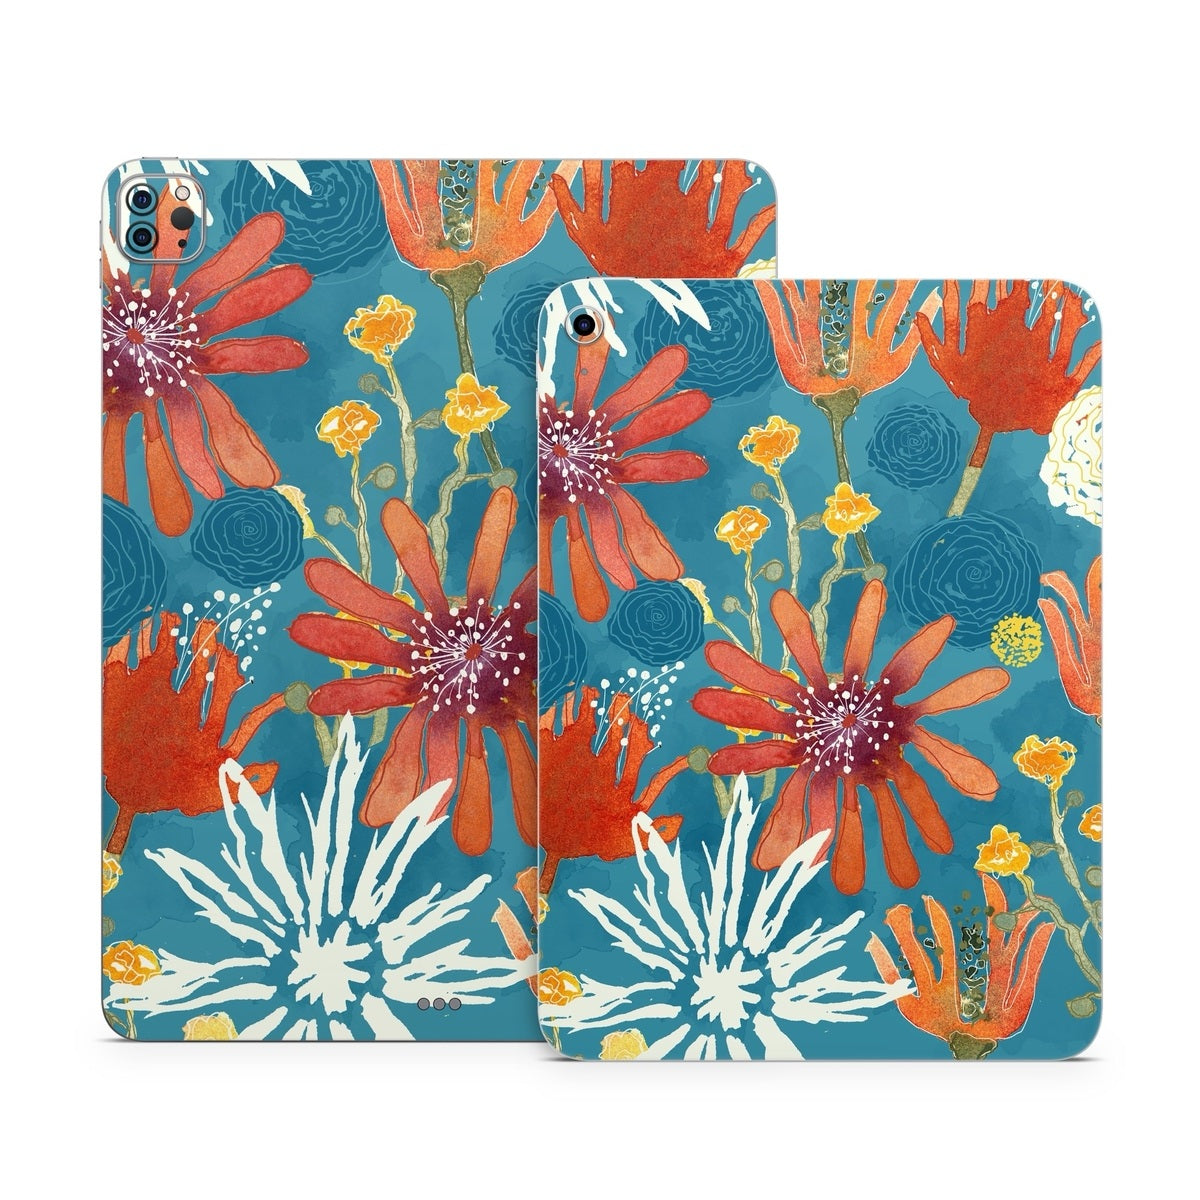 Sunbaked Blooms - Apple iPad Skin